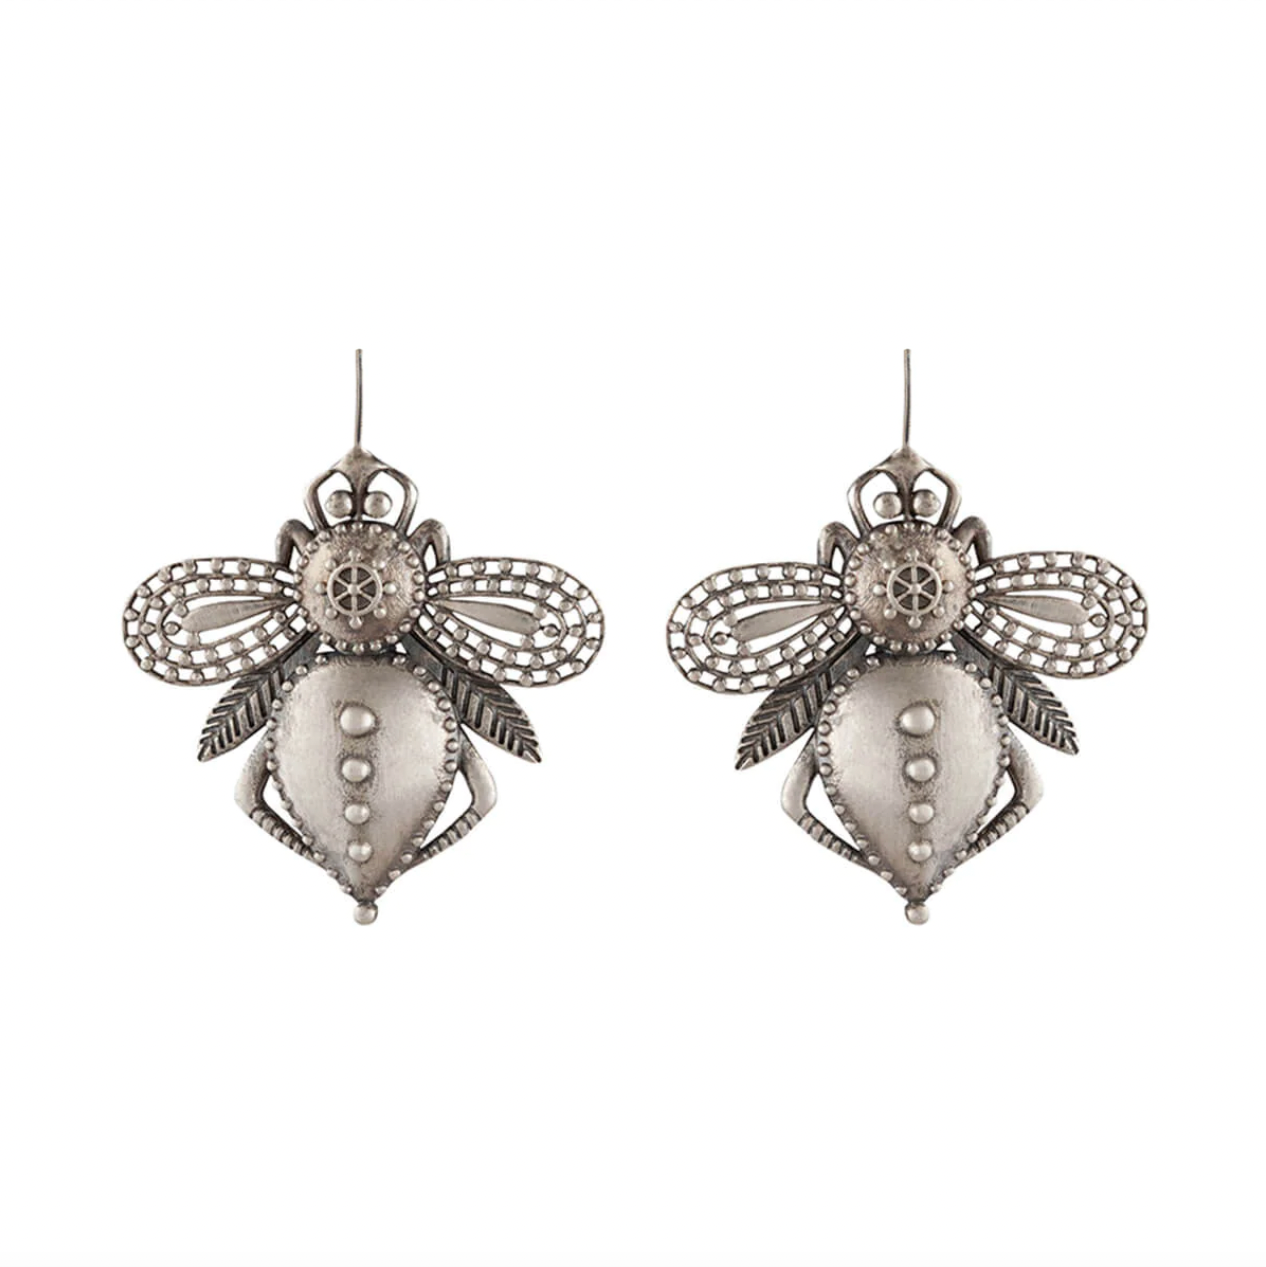 Bhawara Silver Earrings by MOHA